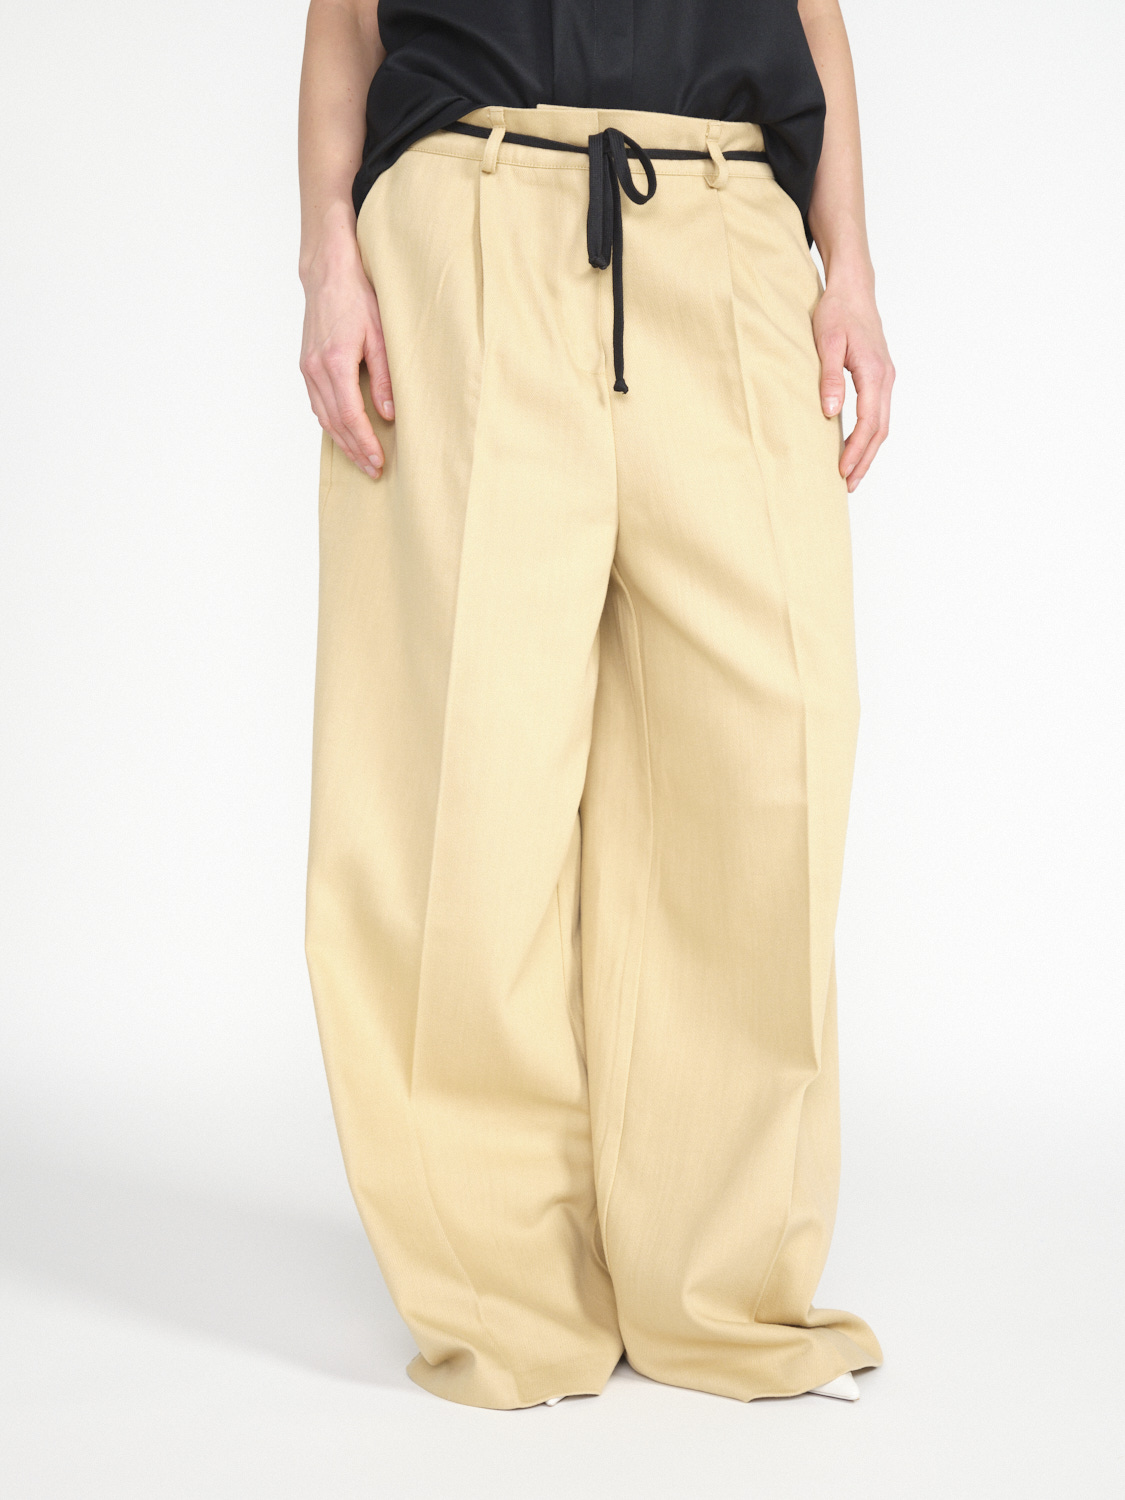 Gitta Banko Pantaloni Jewel - Pantaloni in cotone a gamba larga beige XS/S